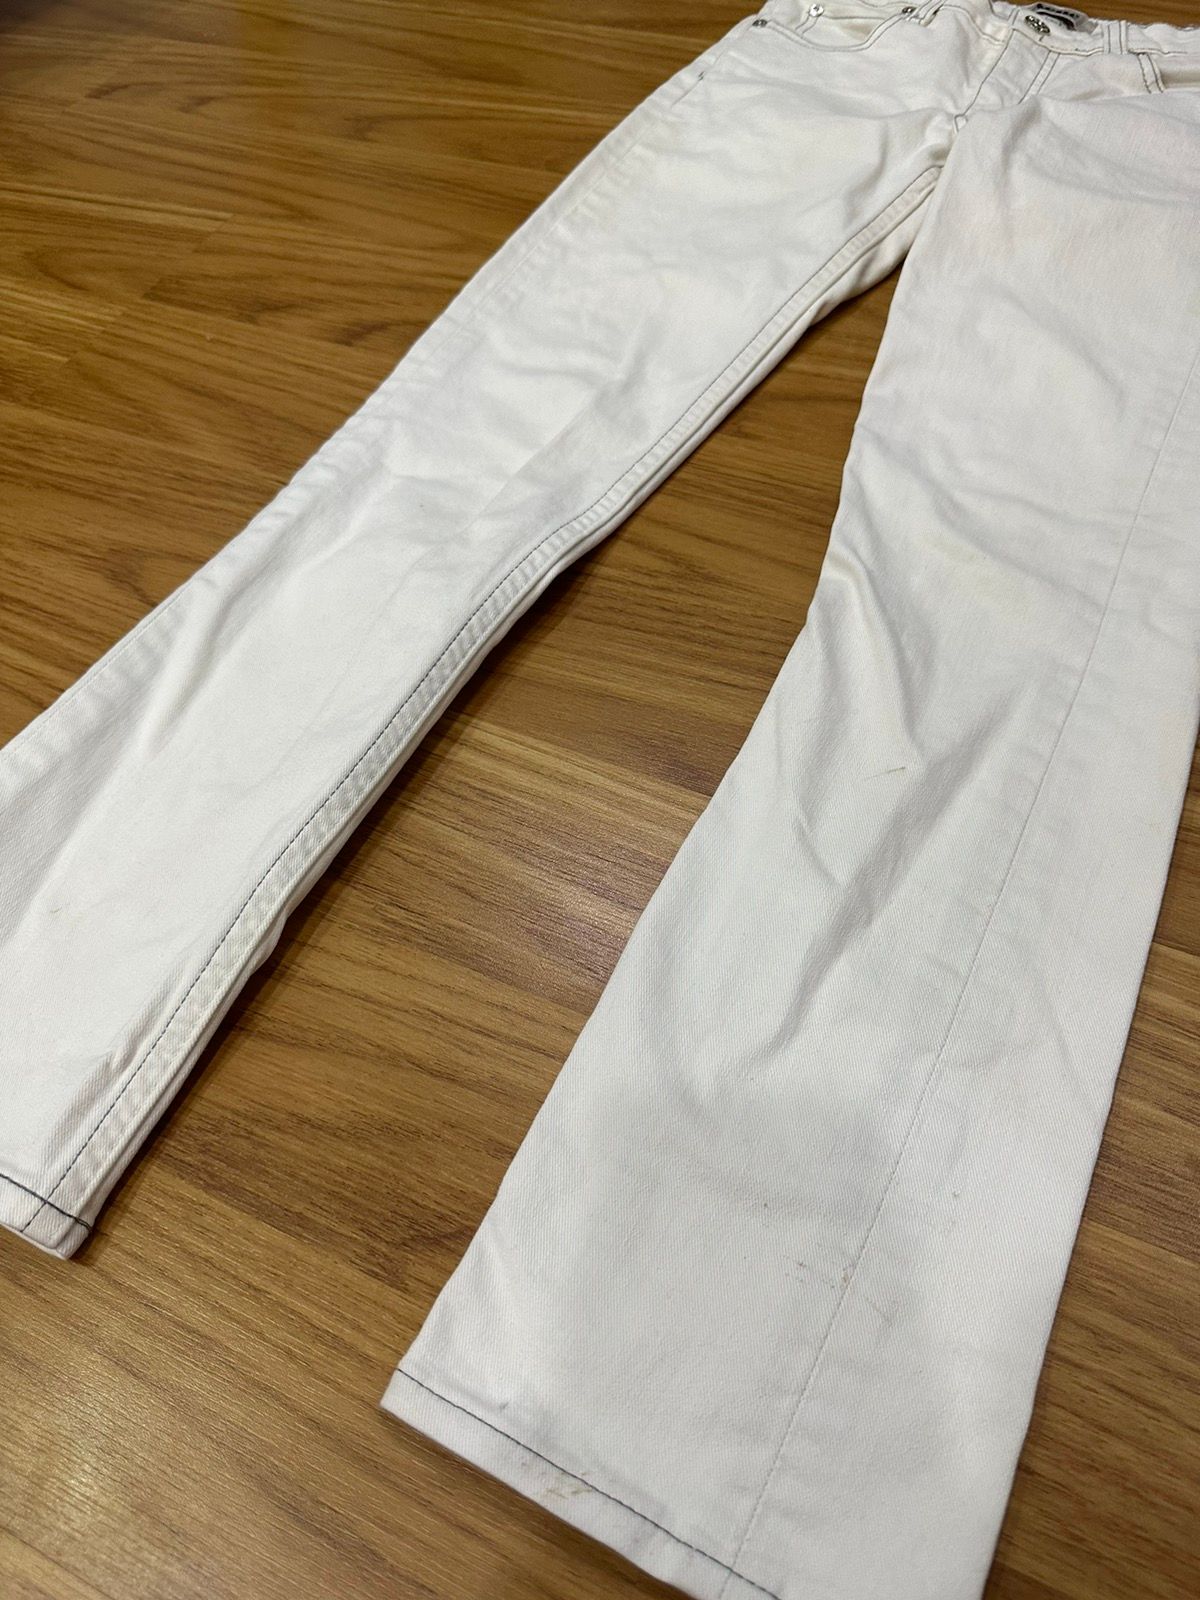 SS15 Acne Studios White Skinny Jeans - 5